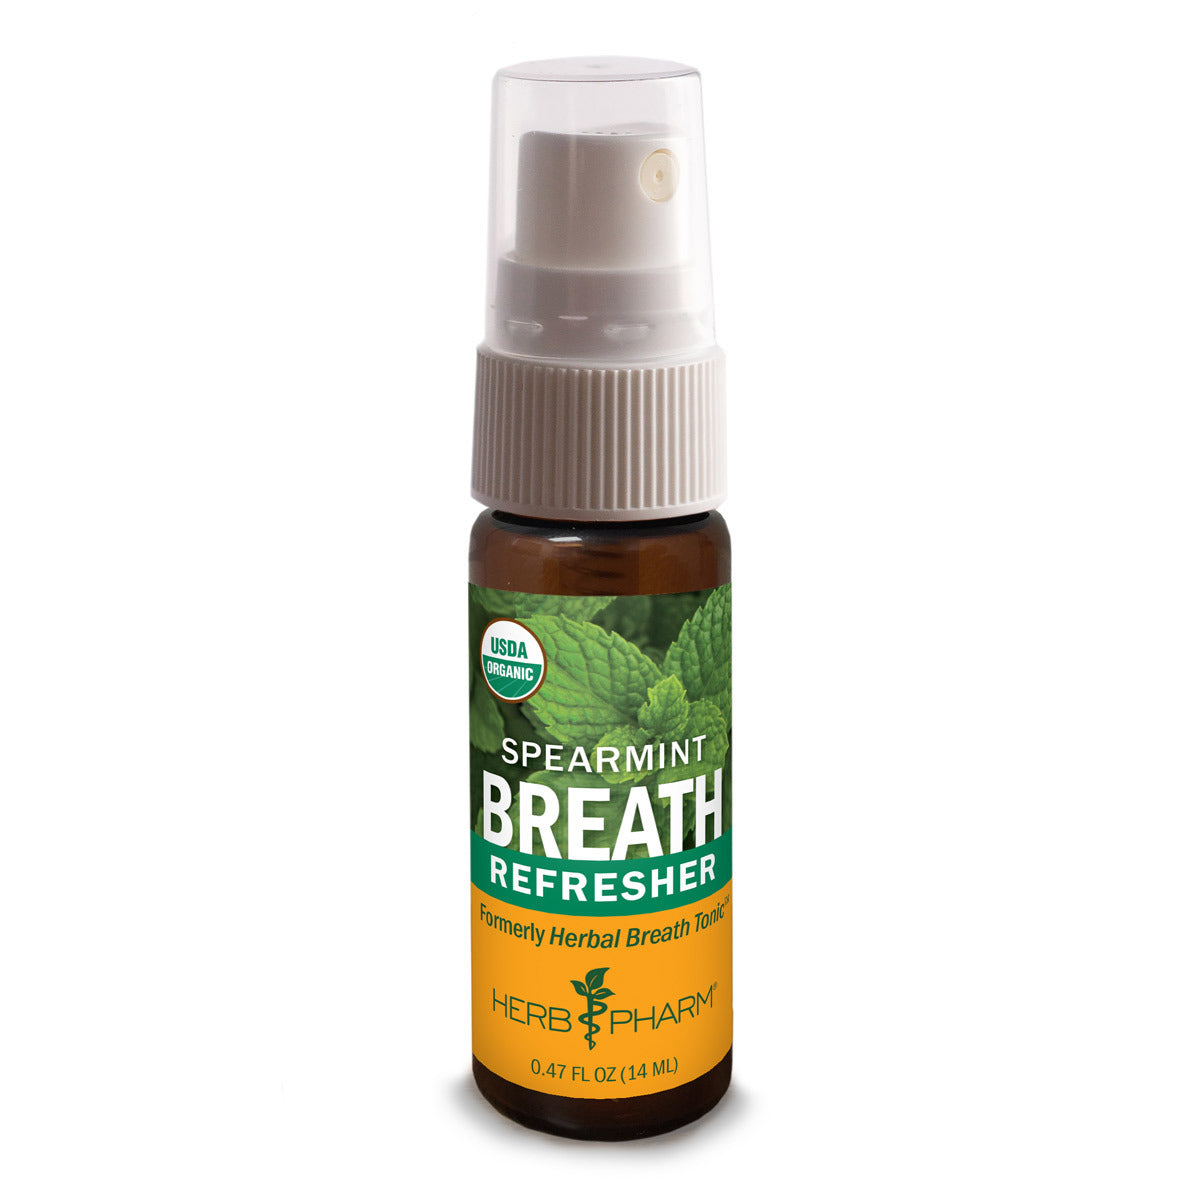 Primary image of Spearmint Breath Tonic